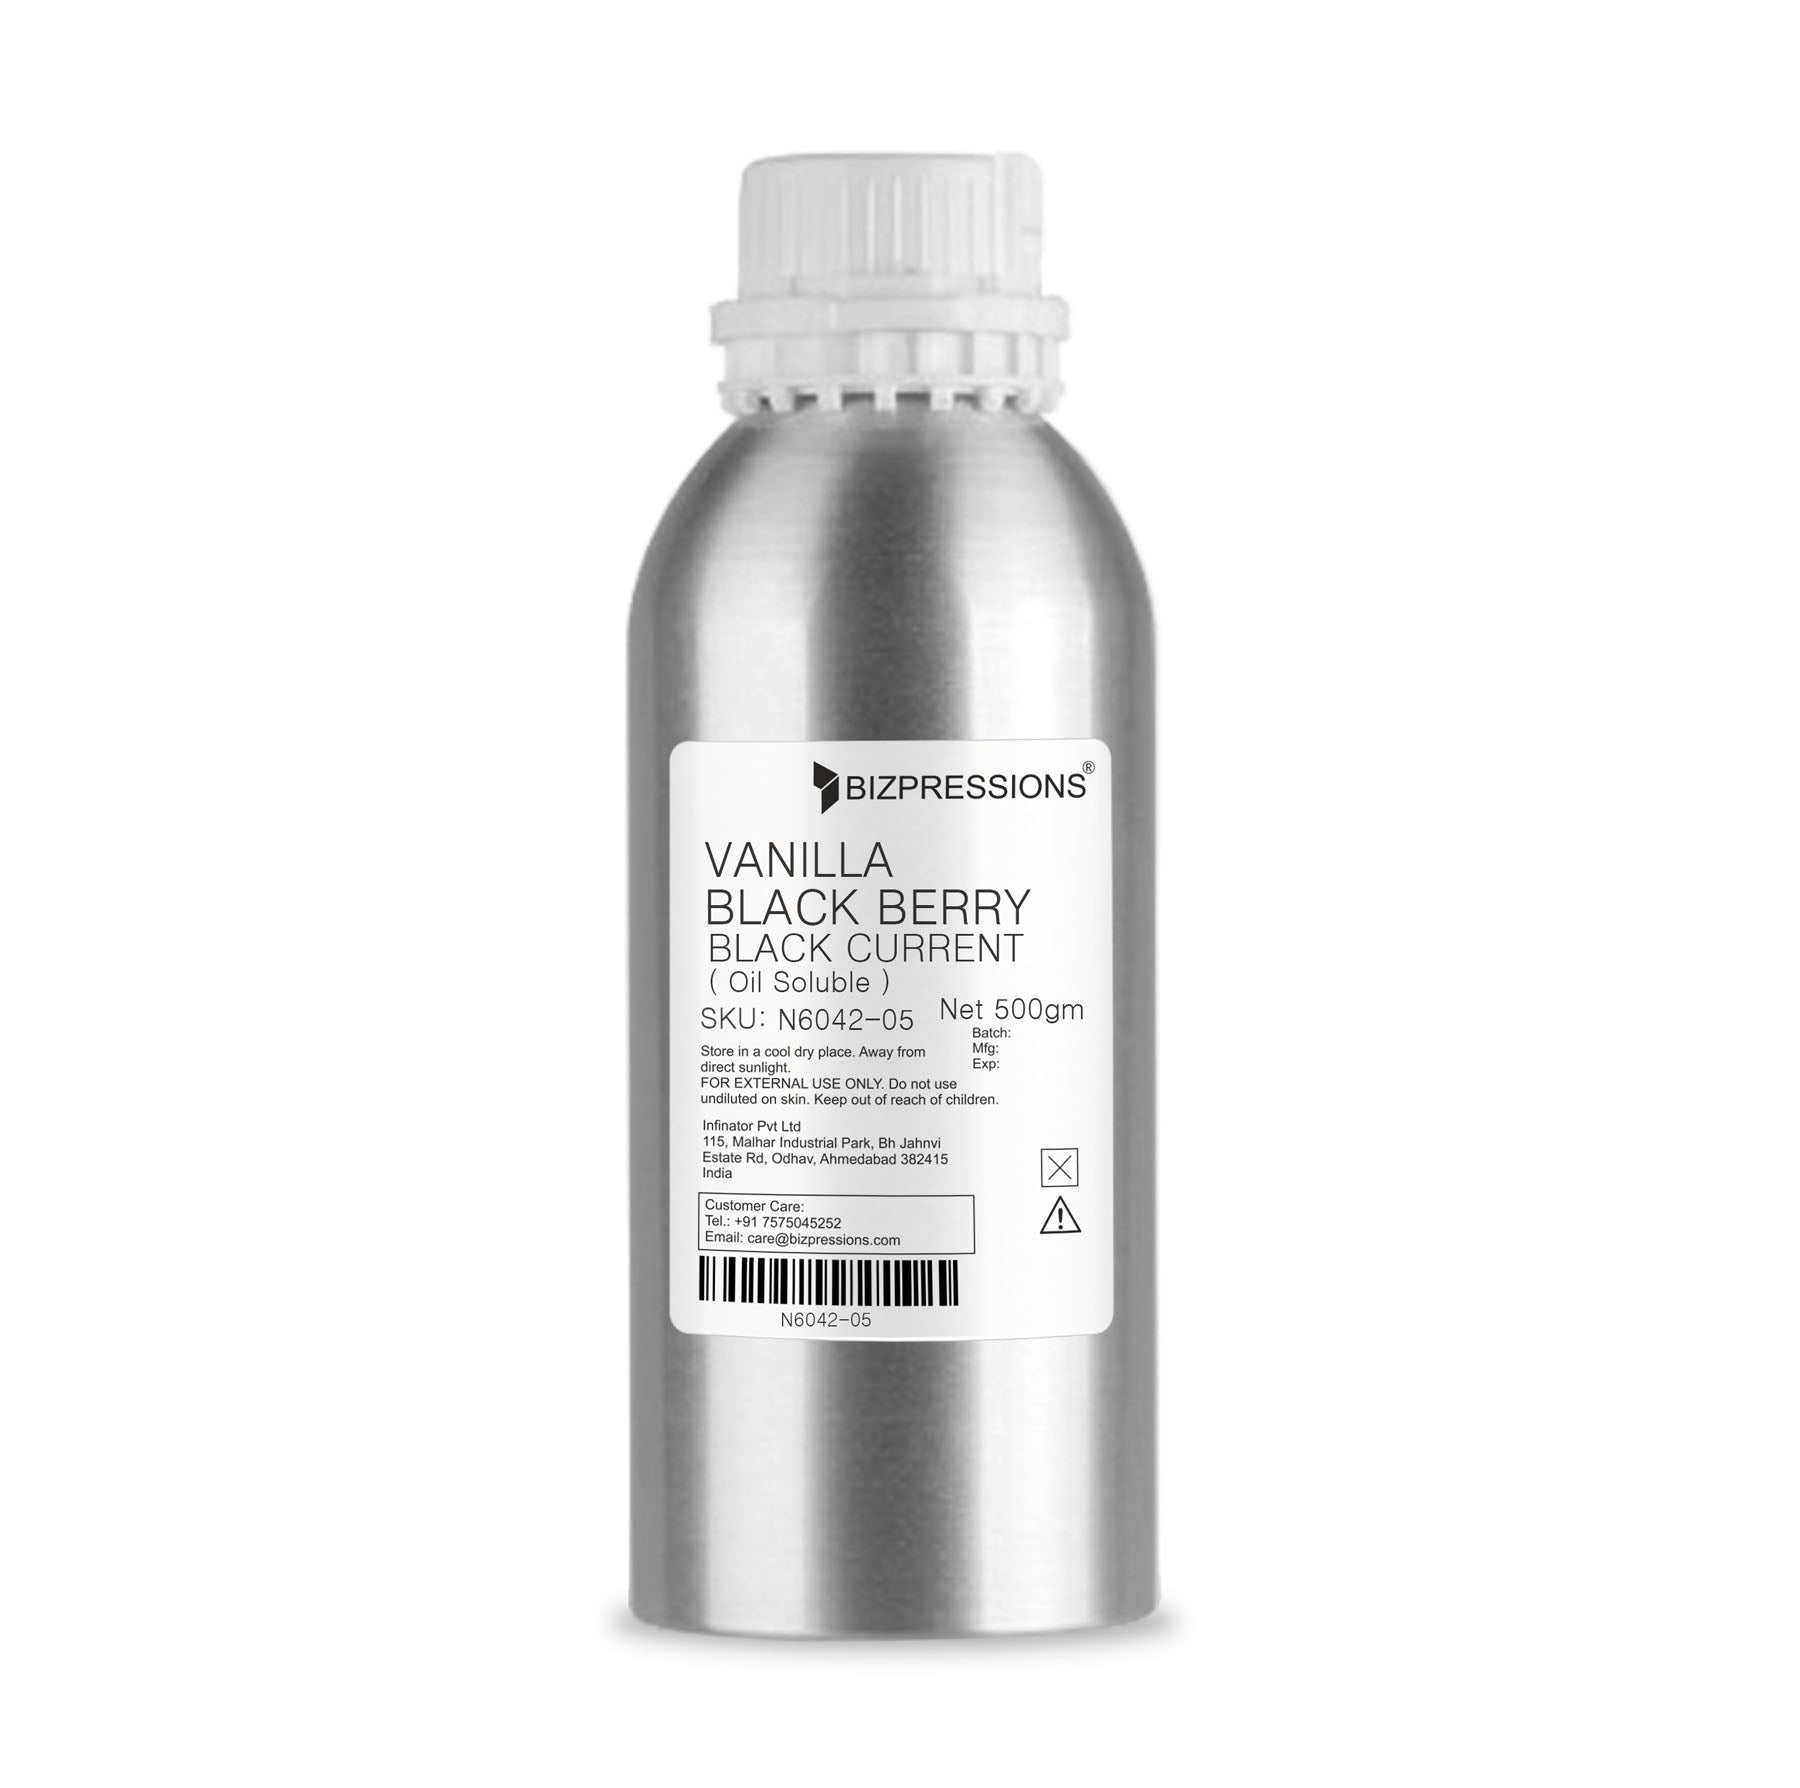 VANILLA BLACK BERRY BLACK CURRENT - Fragrance ( Oil Soluble ) - 500 gm